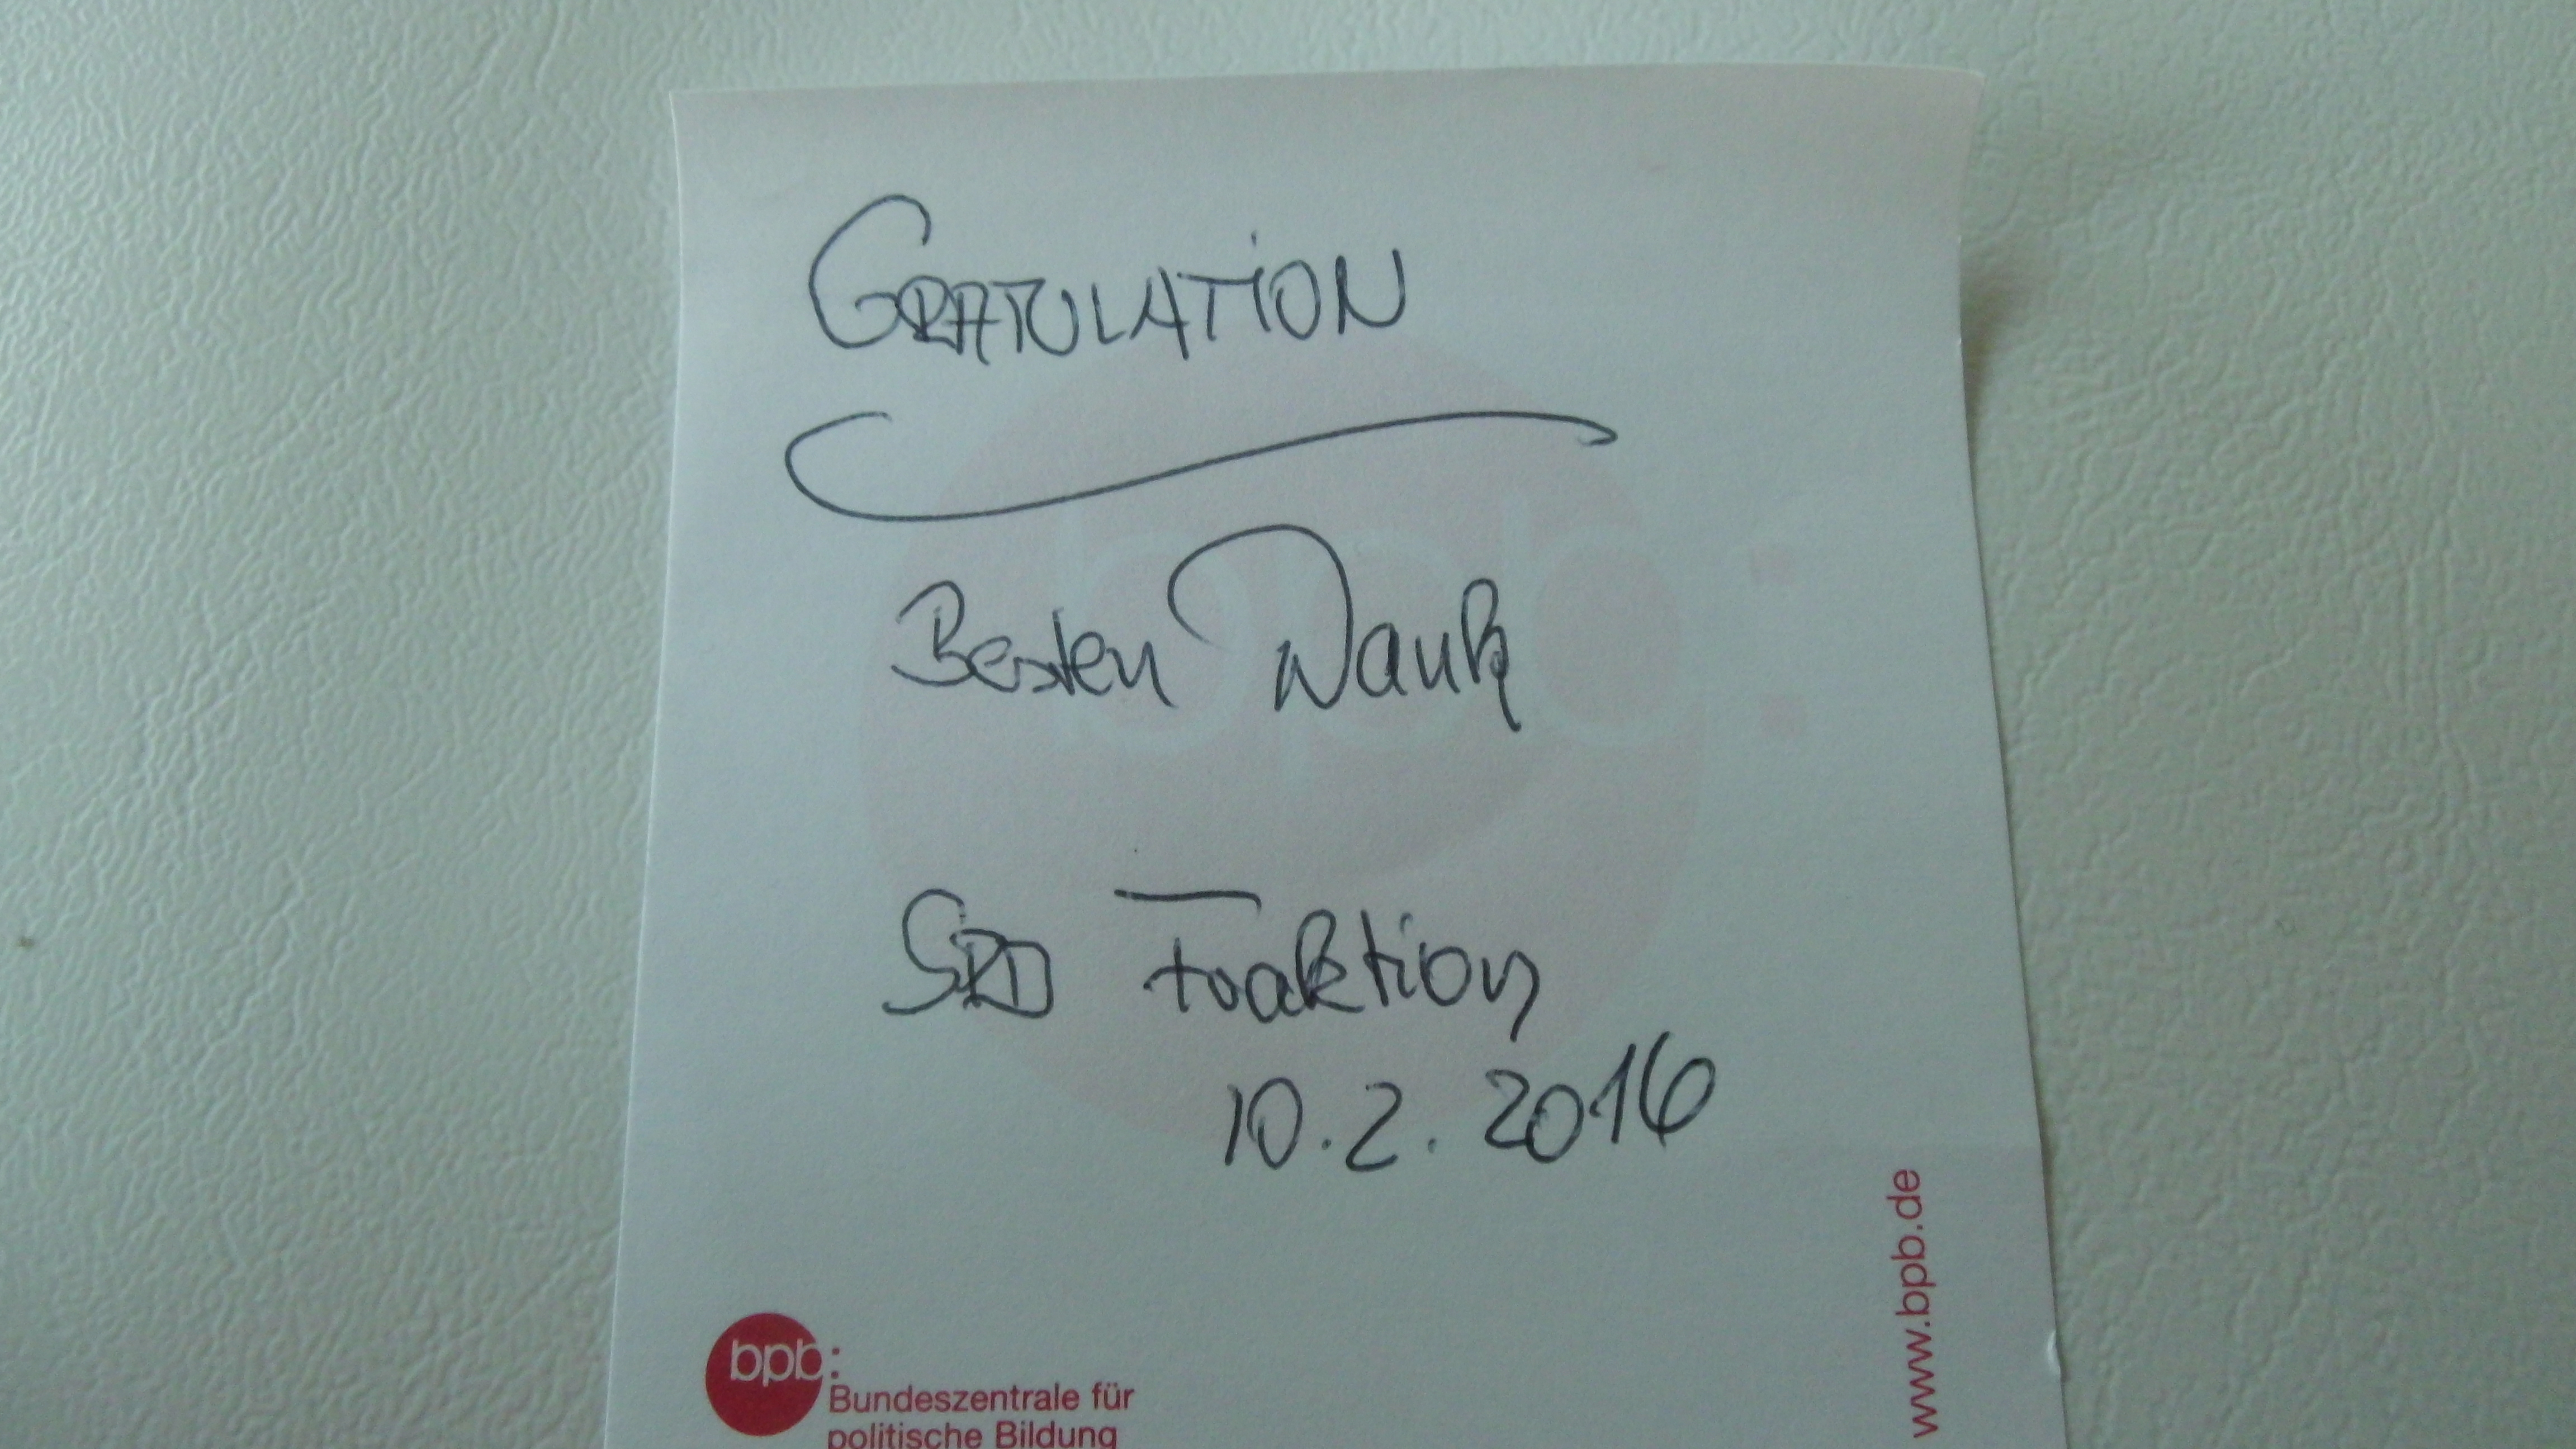 Gratulation! Besten Dank! SPD-Fraktion 10.2.2016